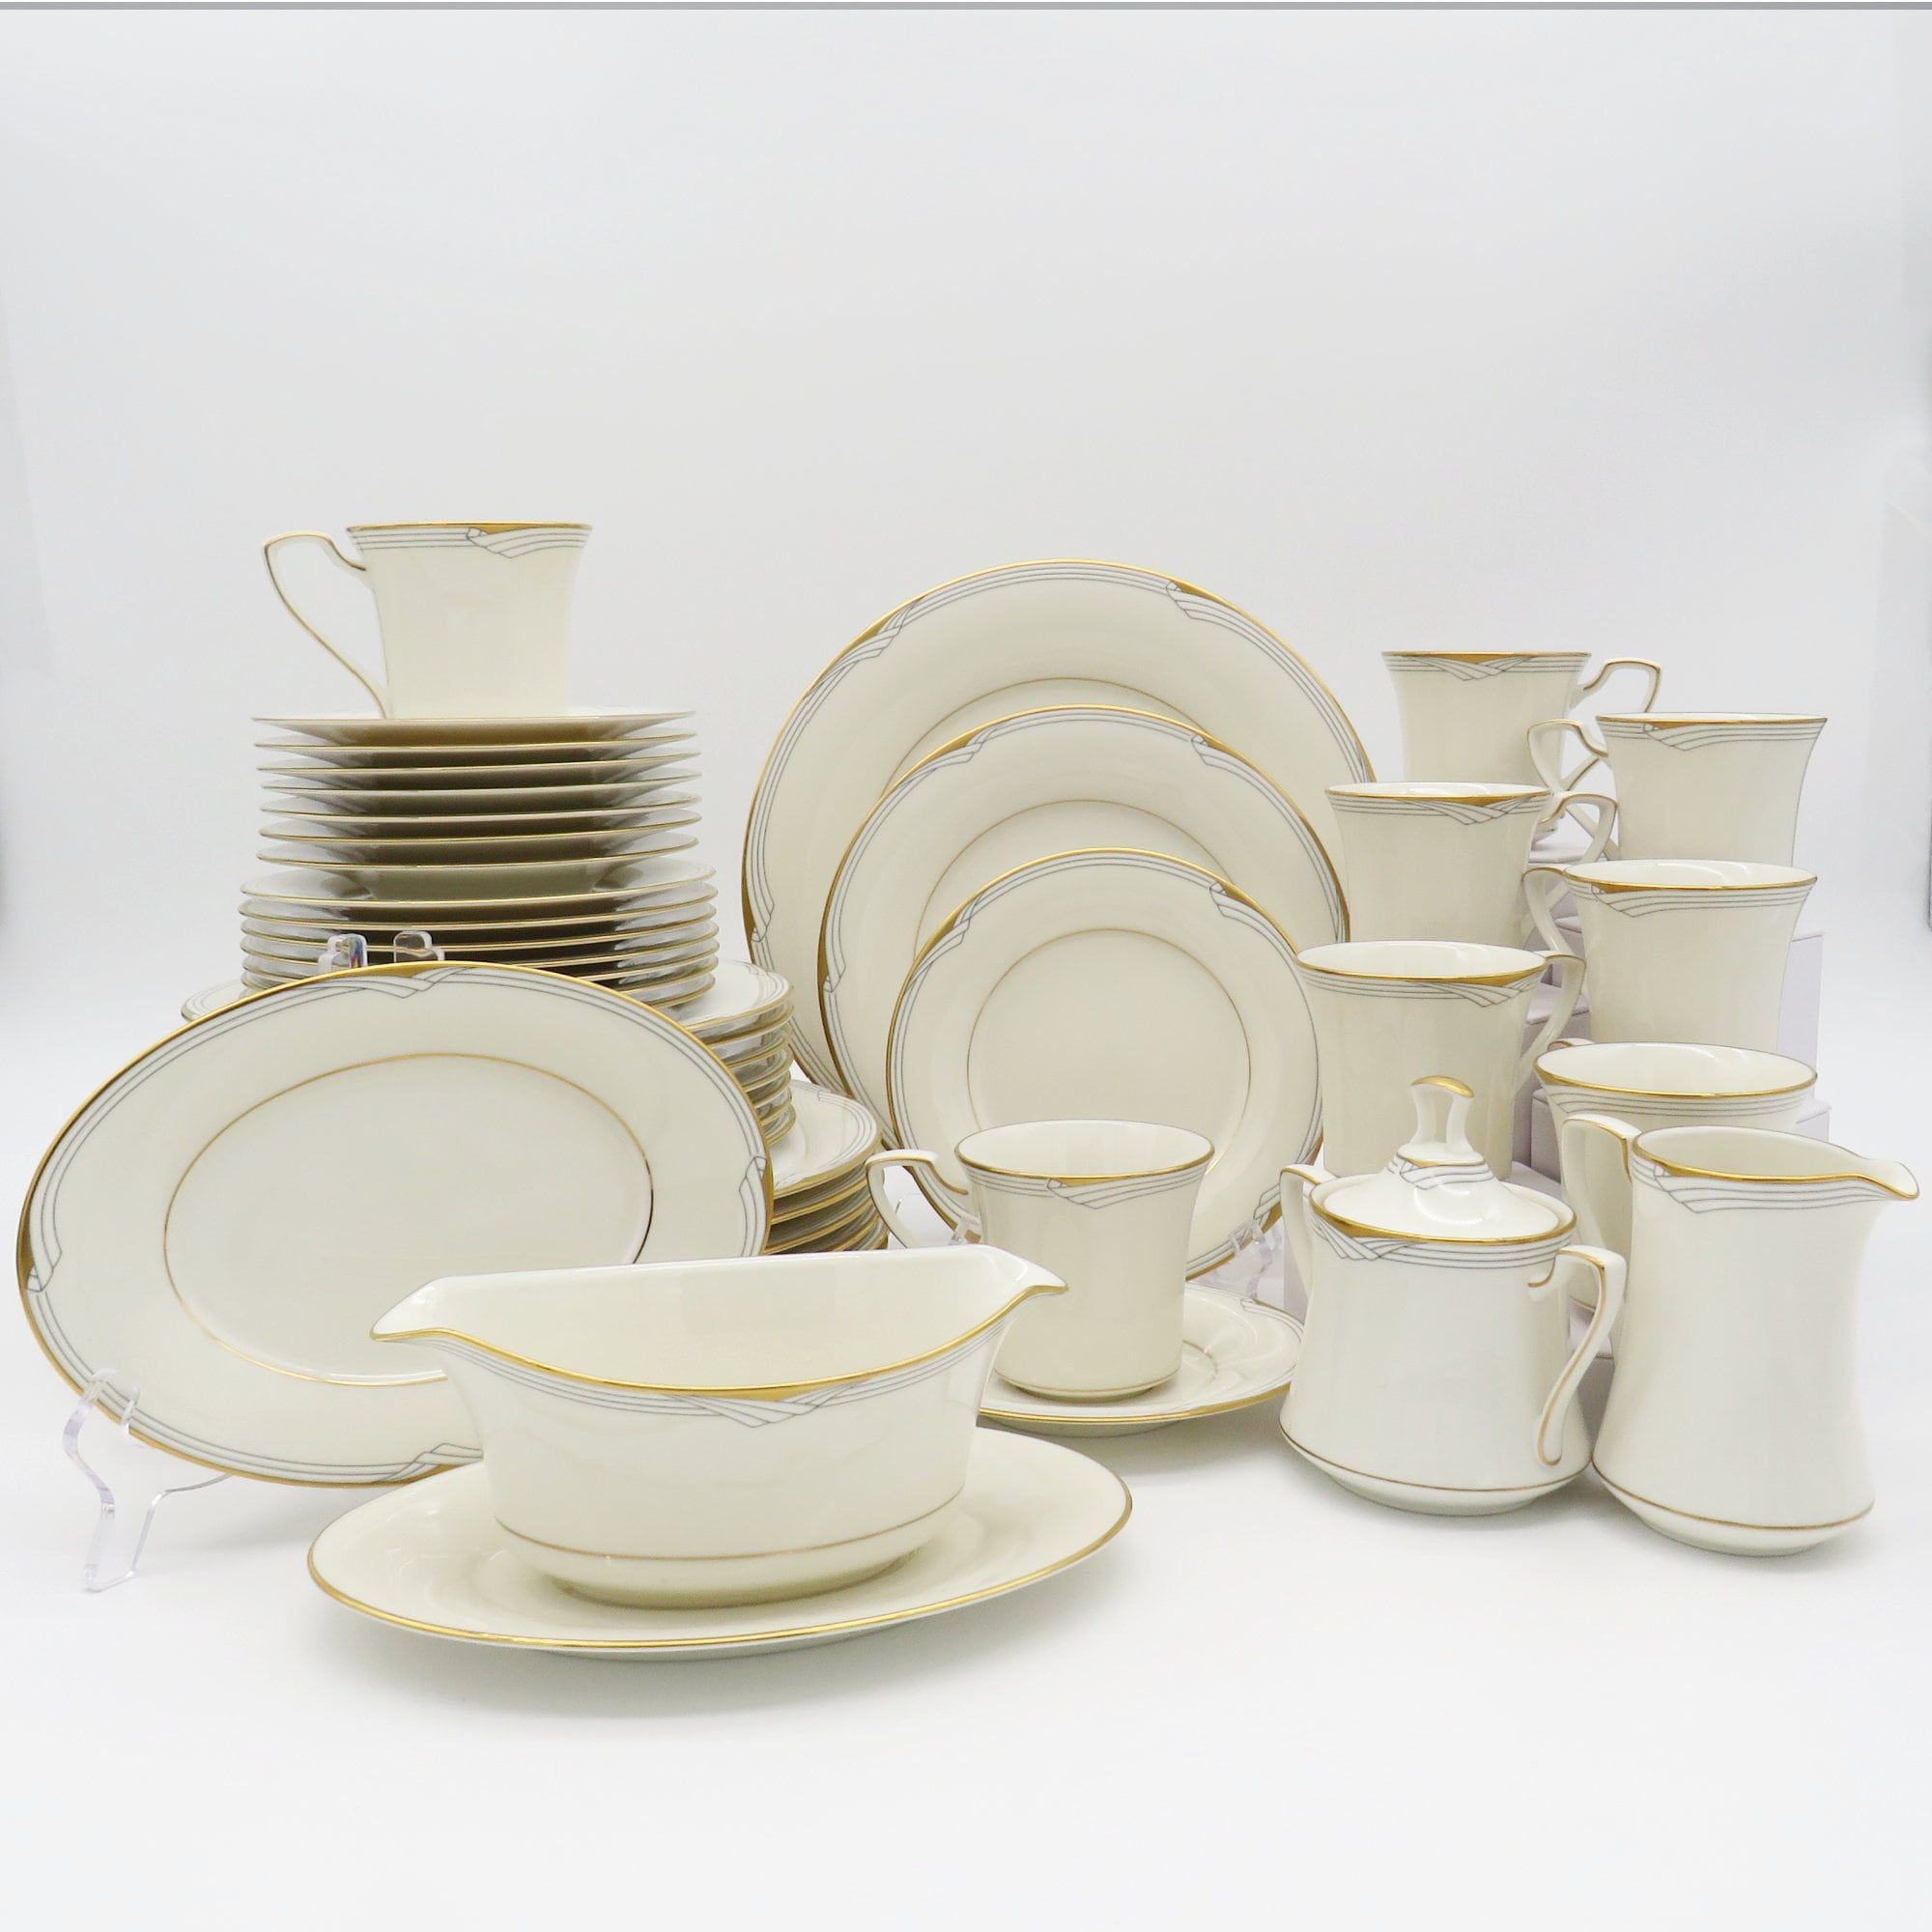 Noritake India - Buy Ceramic Dinner Sets, Crockery Set, Tableware